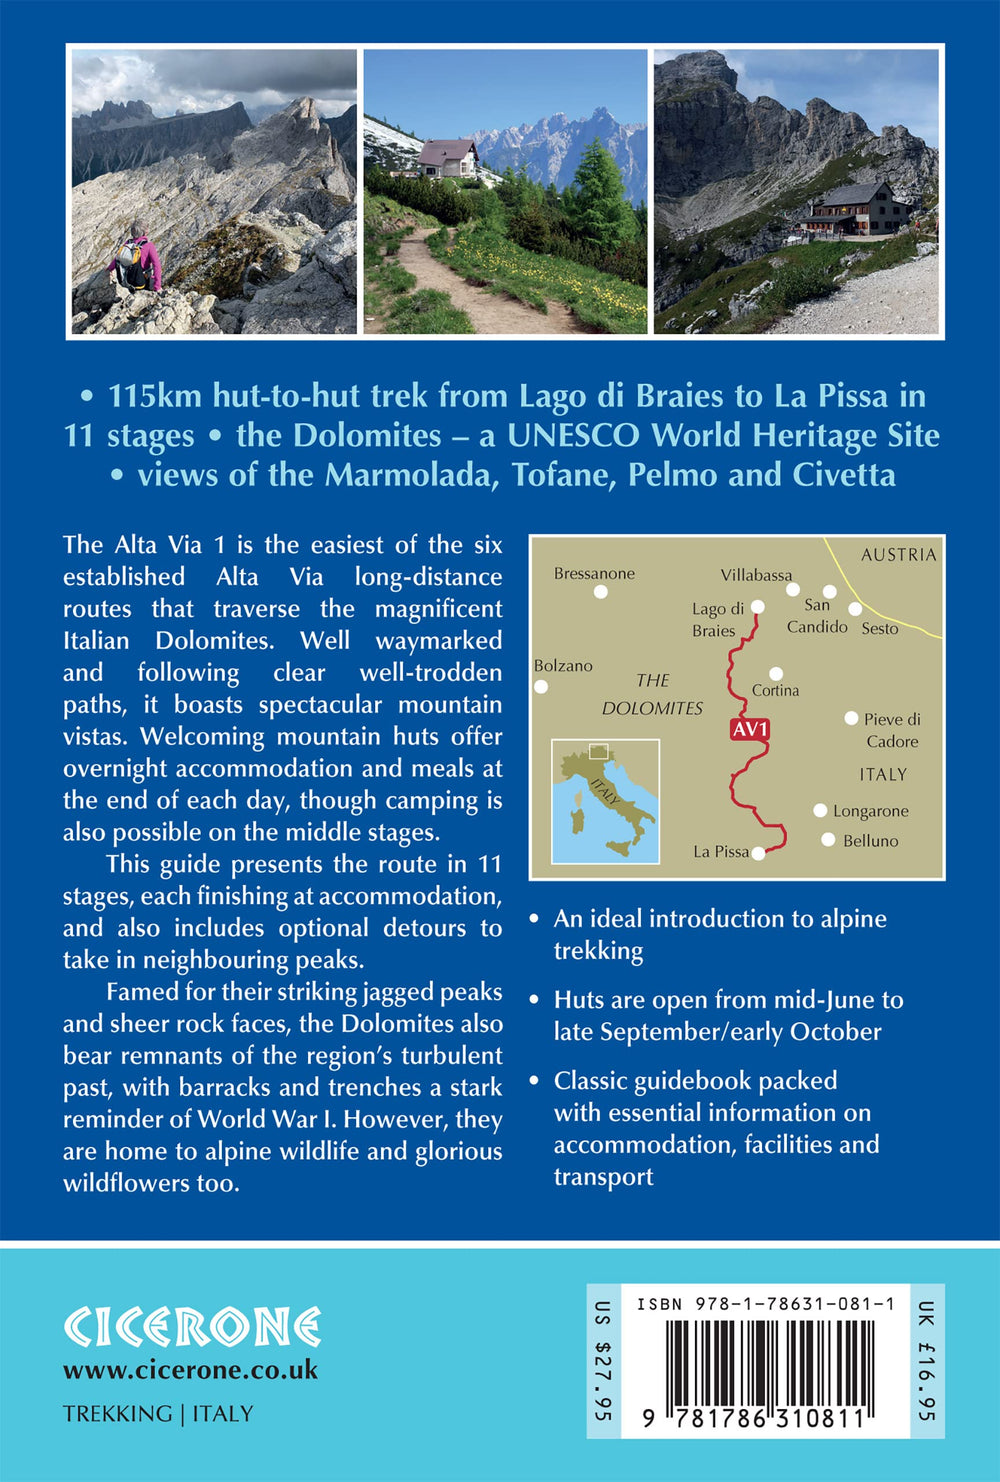 Guide de randonnées (en anglais) - Trekking in the dolomites - Alta via 1 | Cicerone guide de randonnée Cicerone 